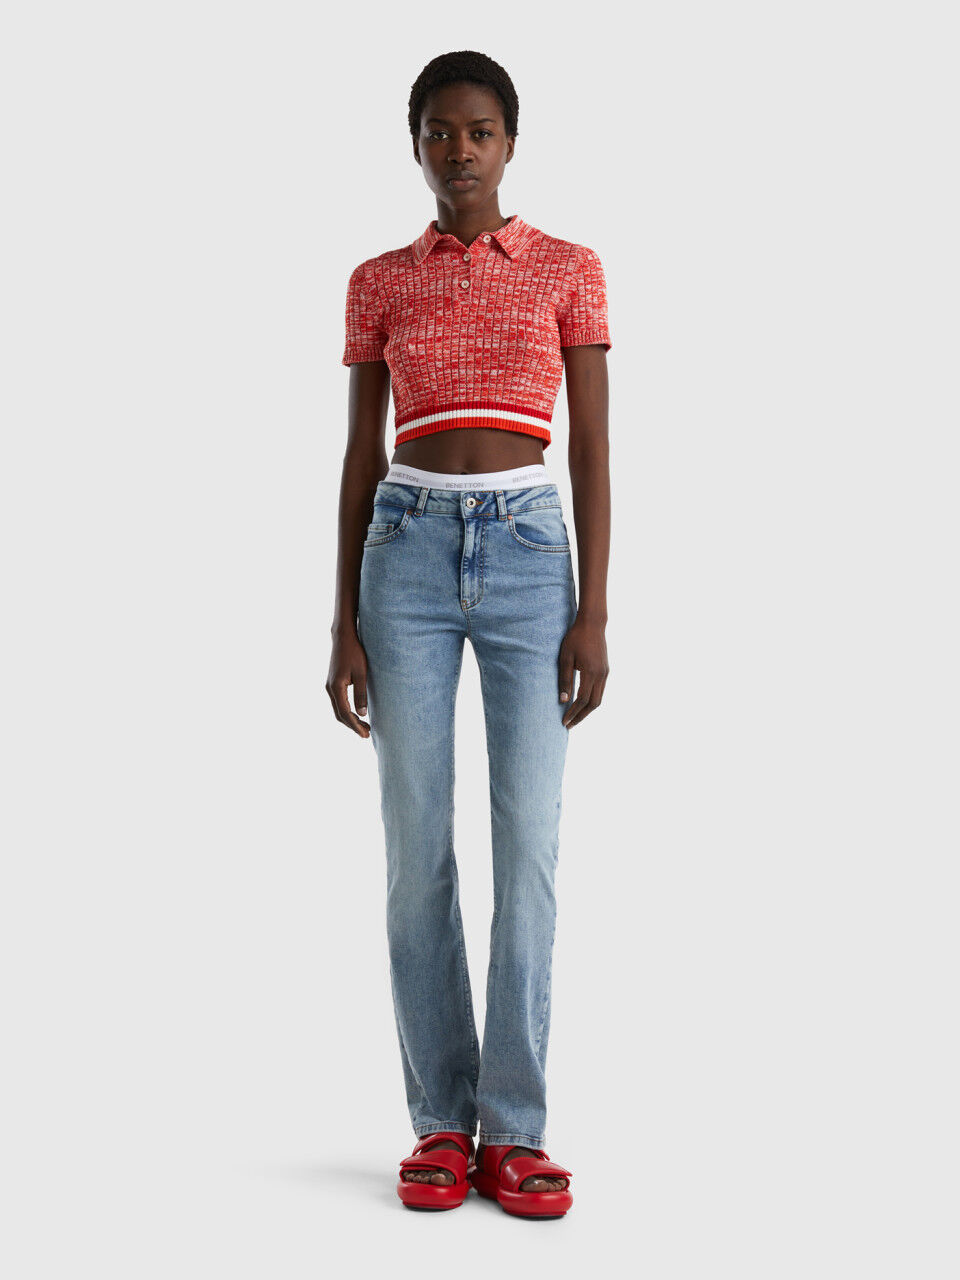 Jeans & Denim Women's Apparel 2023 | Benetton